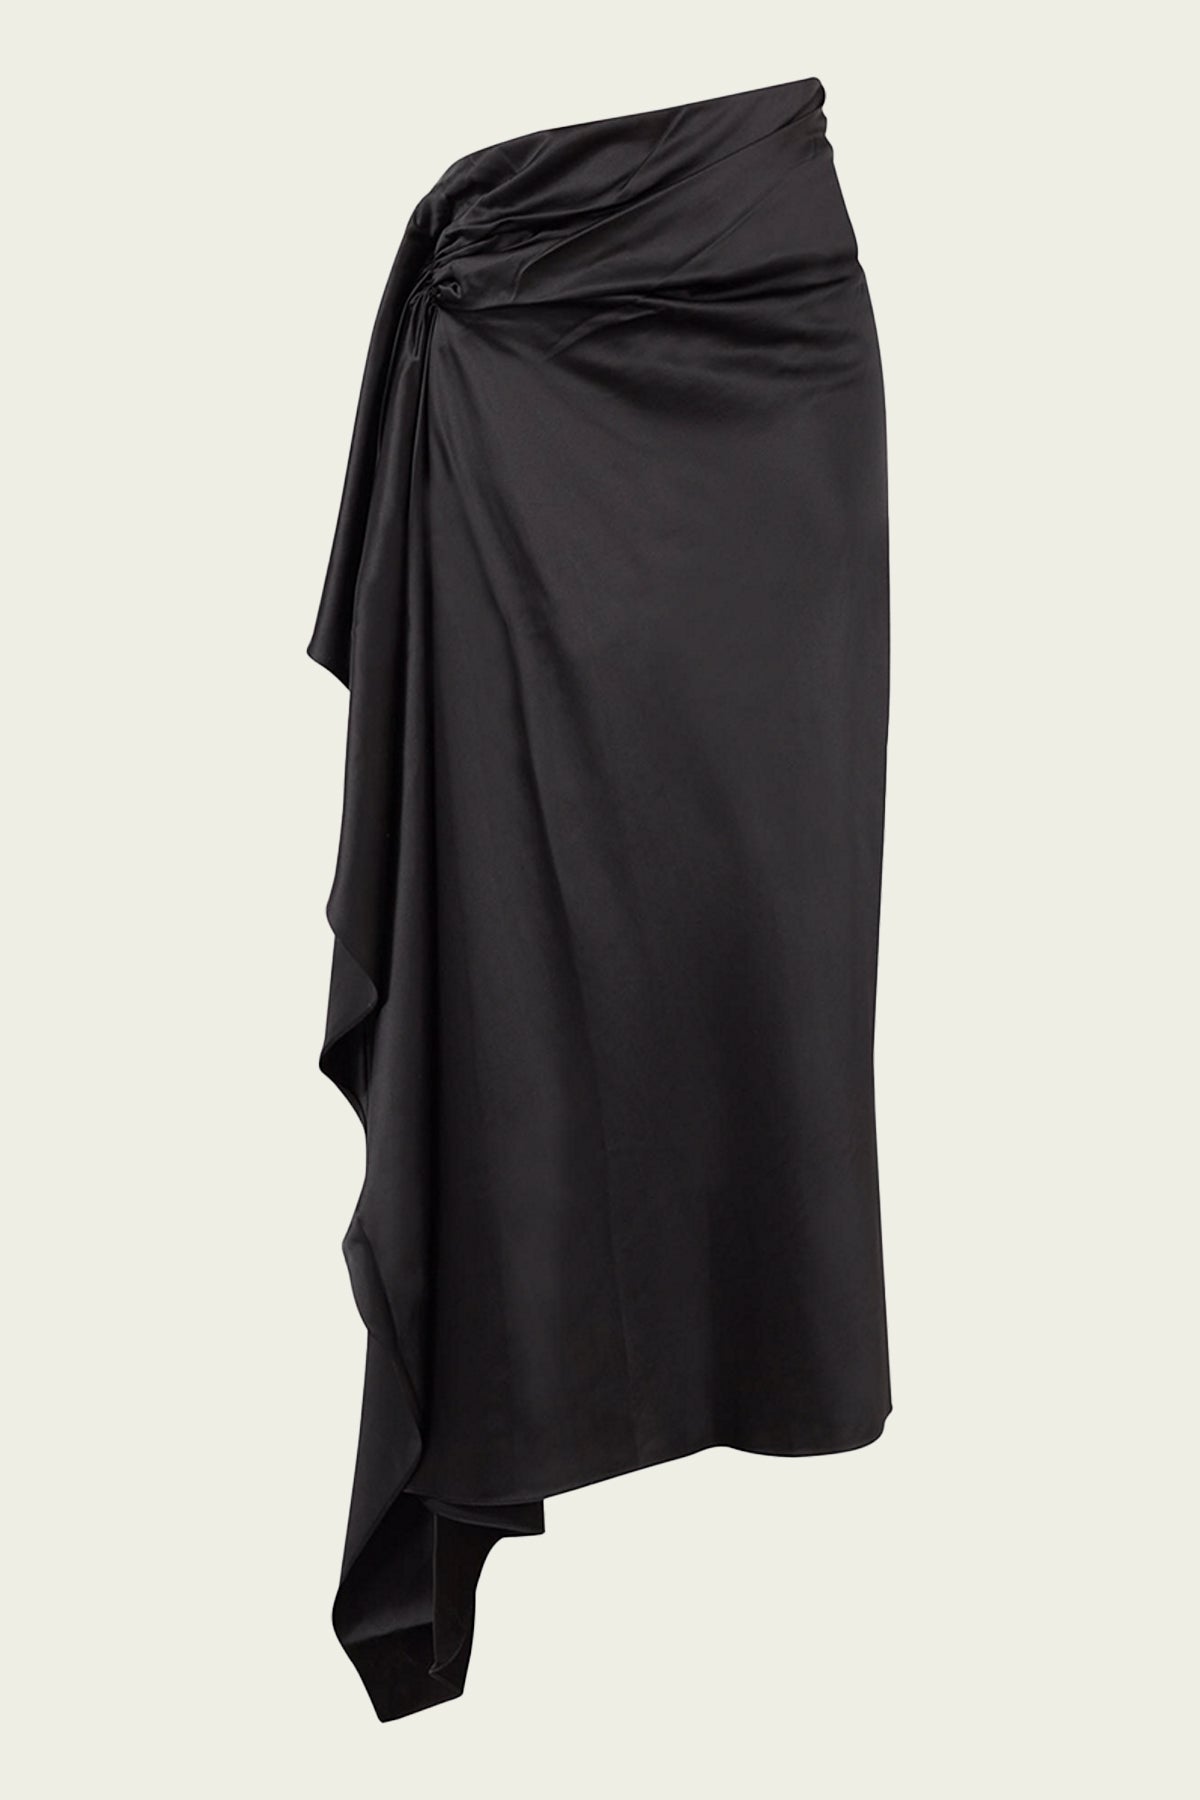 Cusco Silk Elongated Drape Skirt in Black - shop-olivia.com